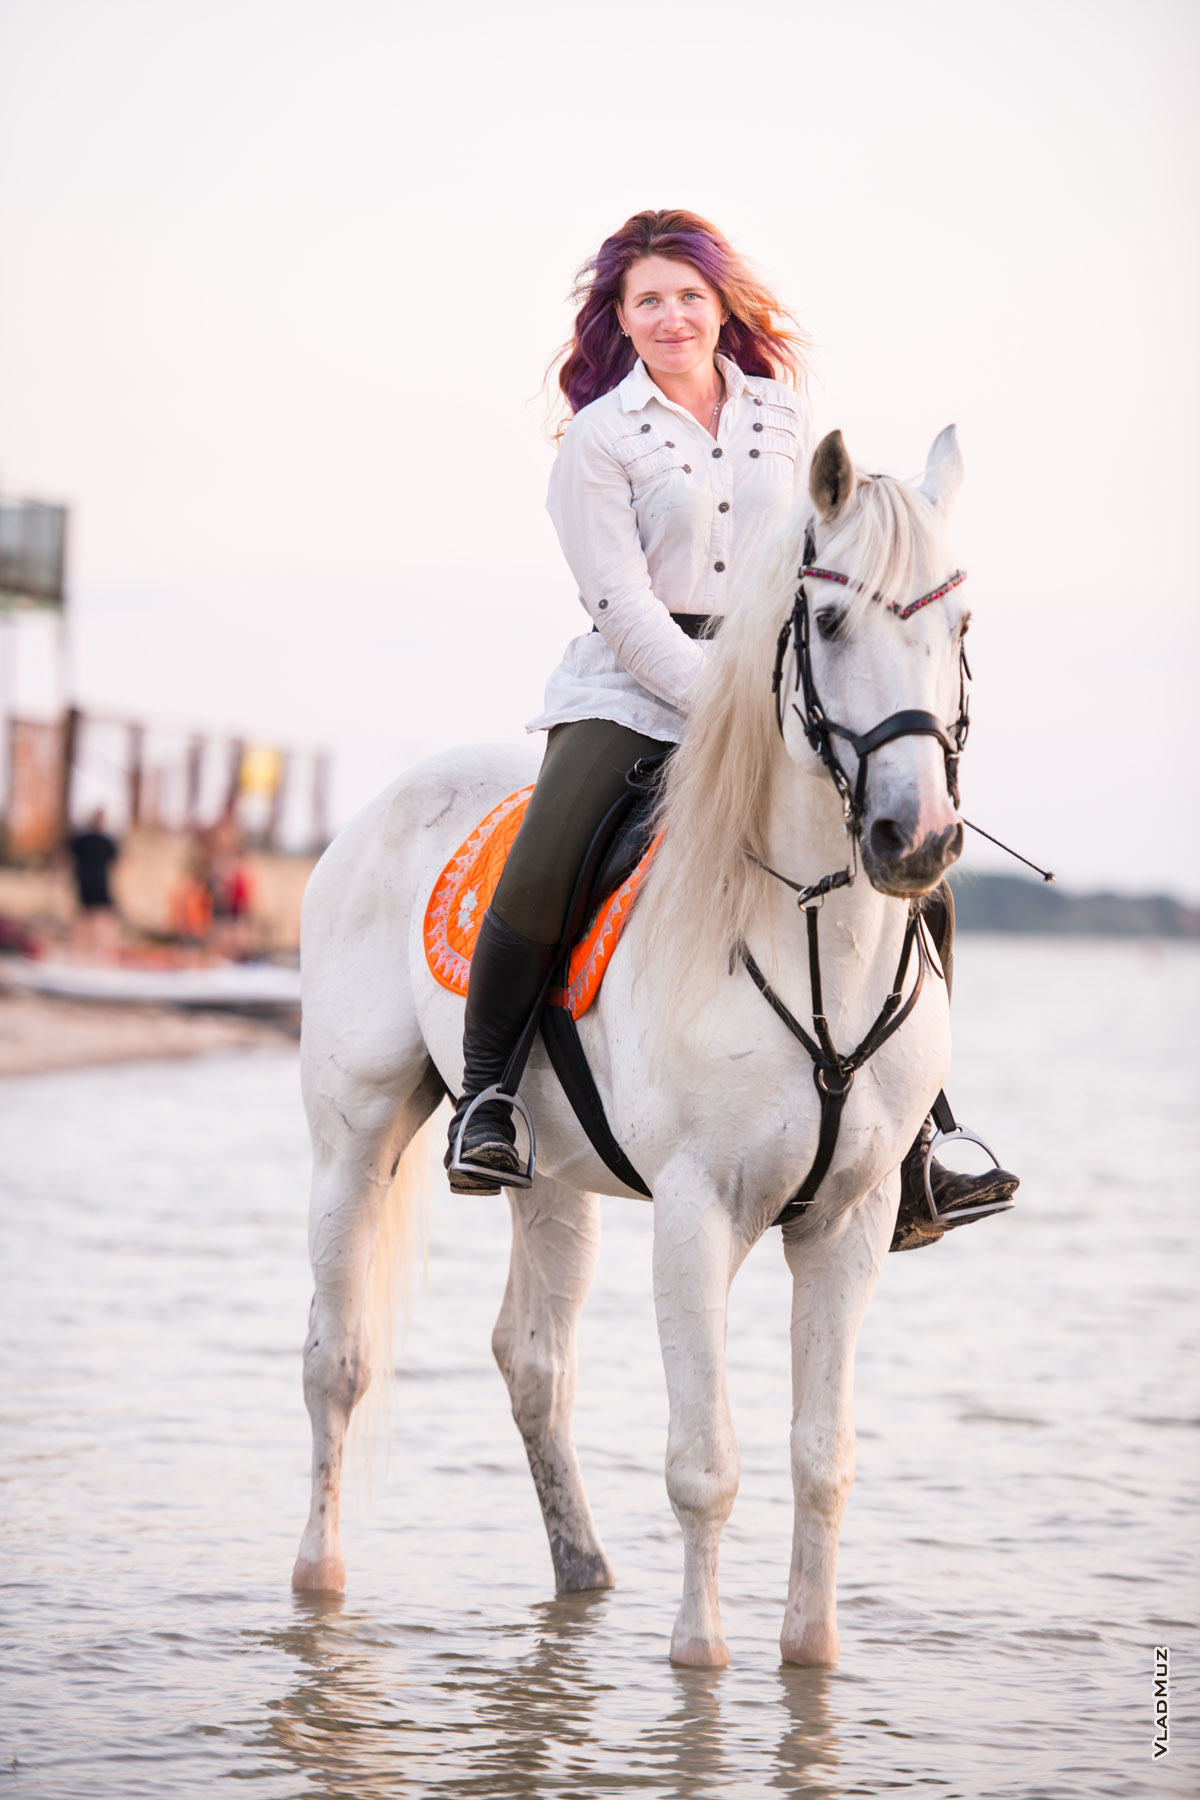 Фото девушки на белом коне в воде, крупным планом